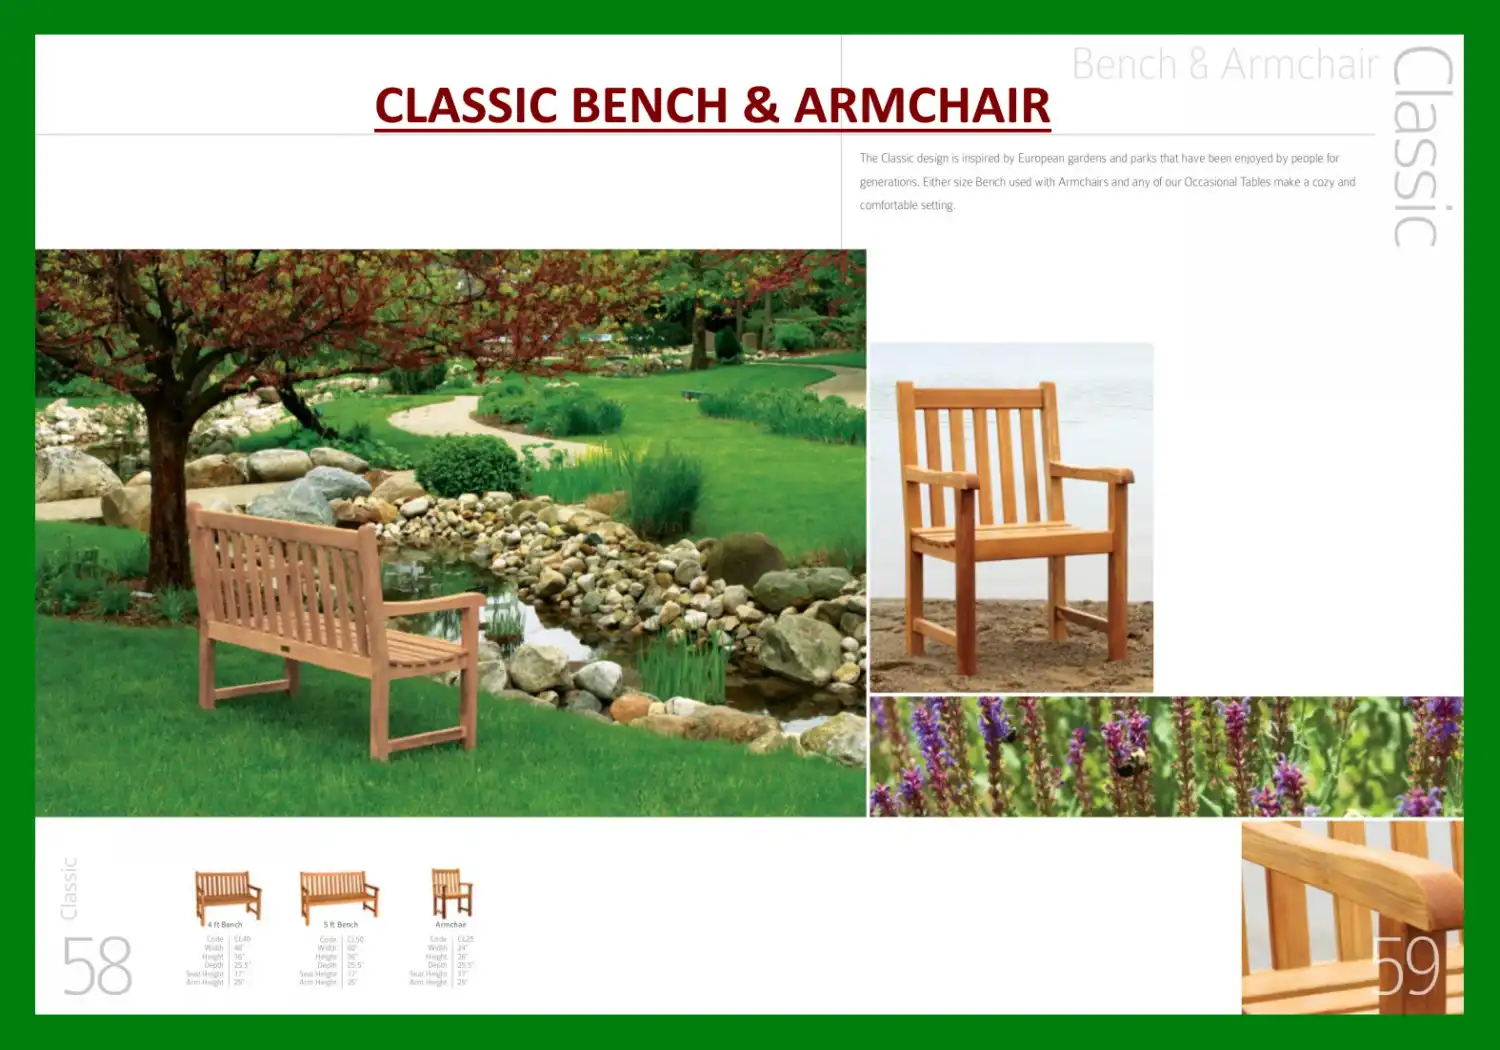 CLASSIC BENCH & ARMCHAIR